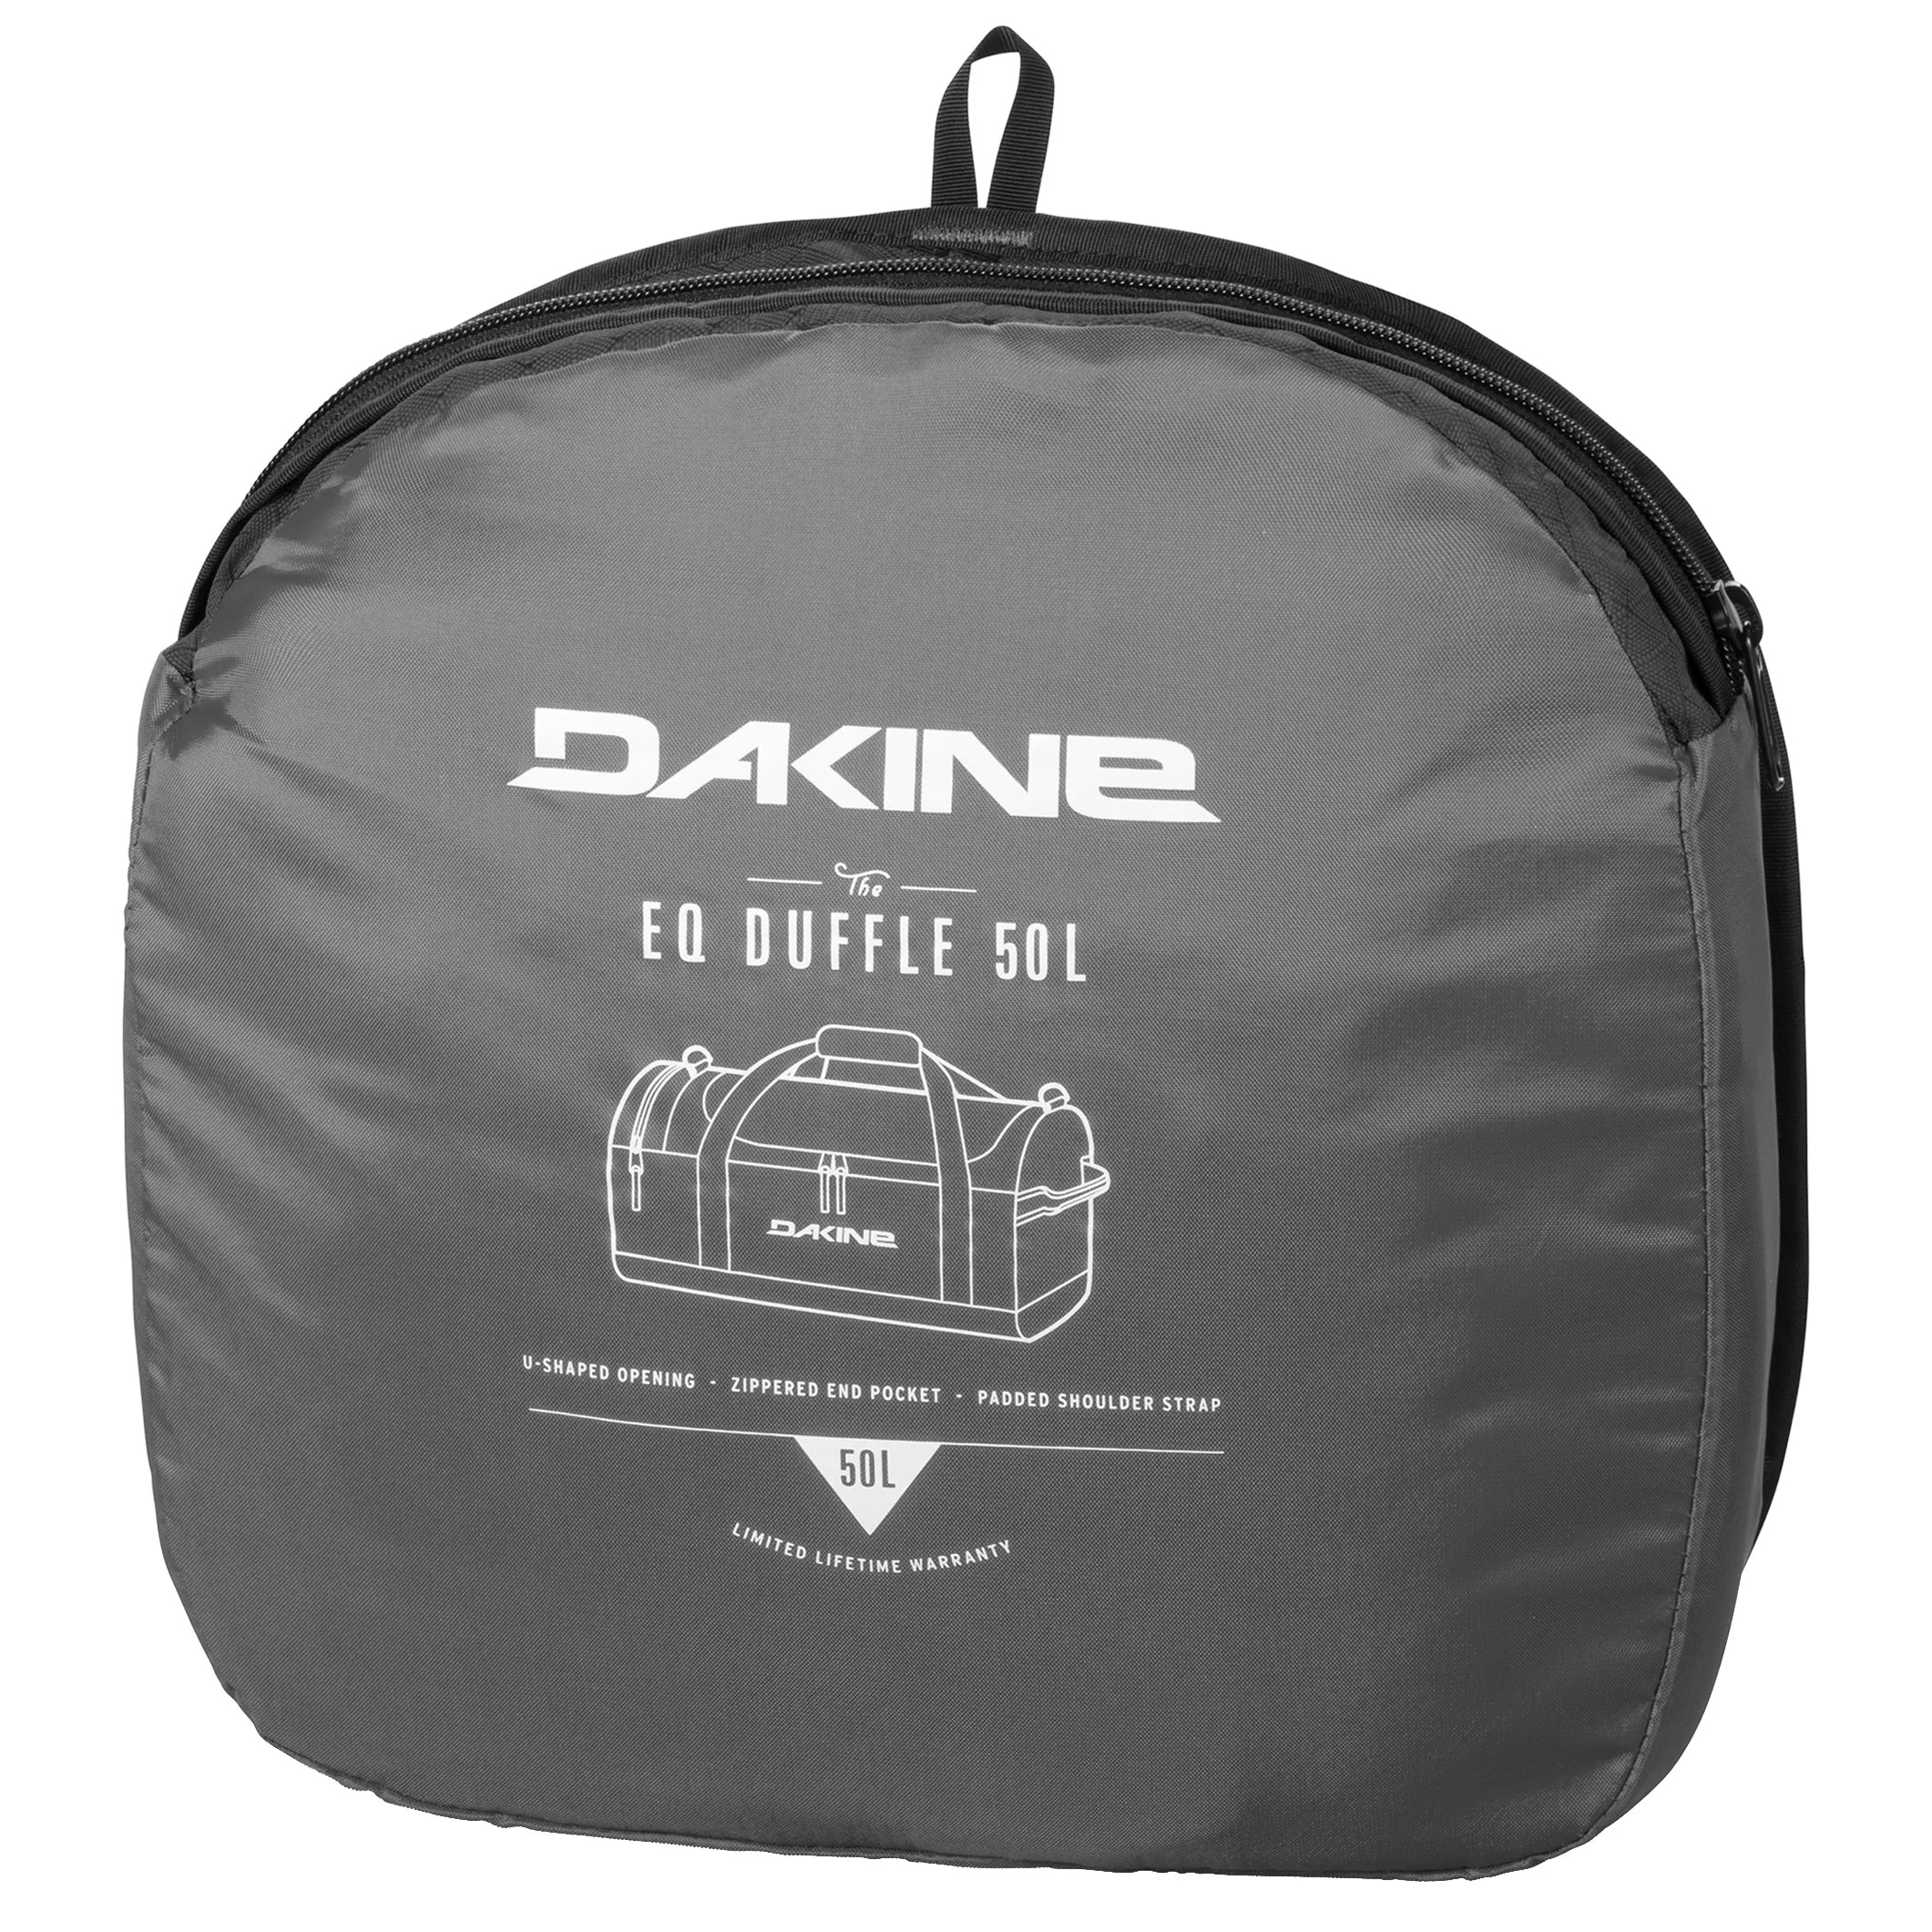 Dakine Packs & Bags EQ Duffle 50L Sports Bag 56 cm - Grapevine